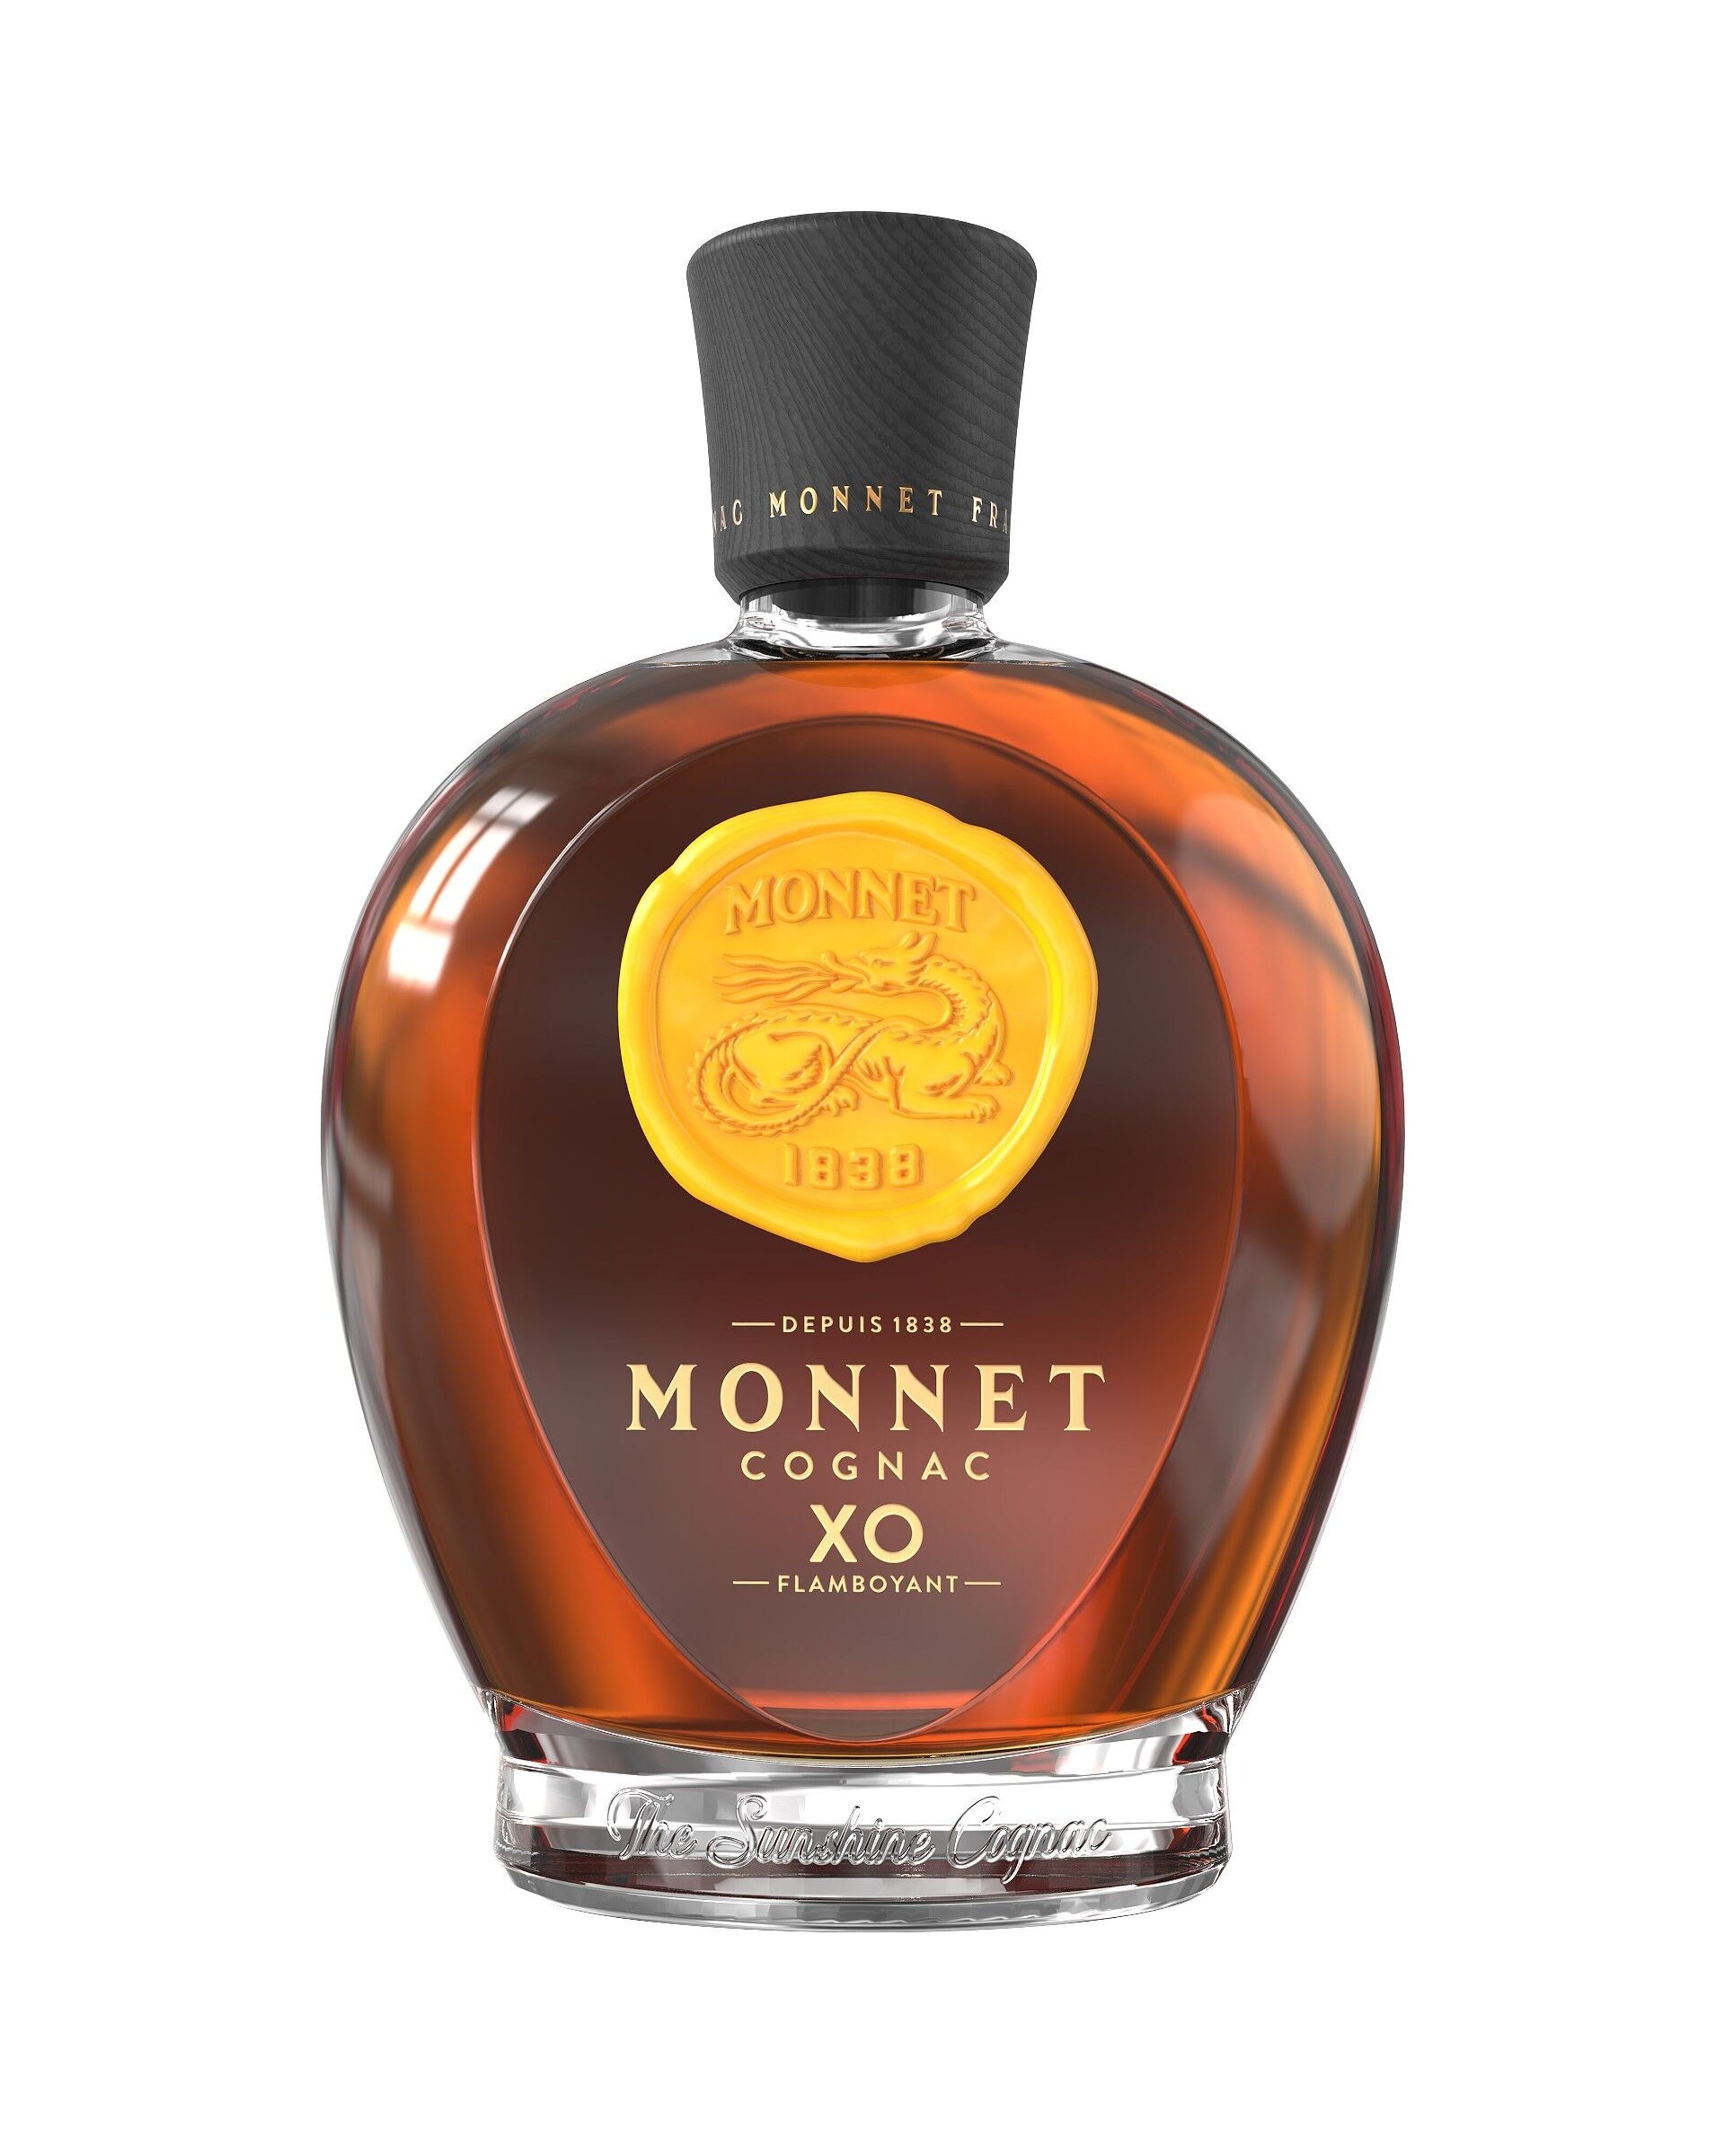 Monnet XO Prestige 750ml - Liquors Inc.